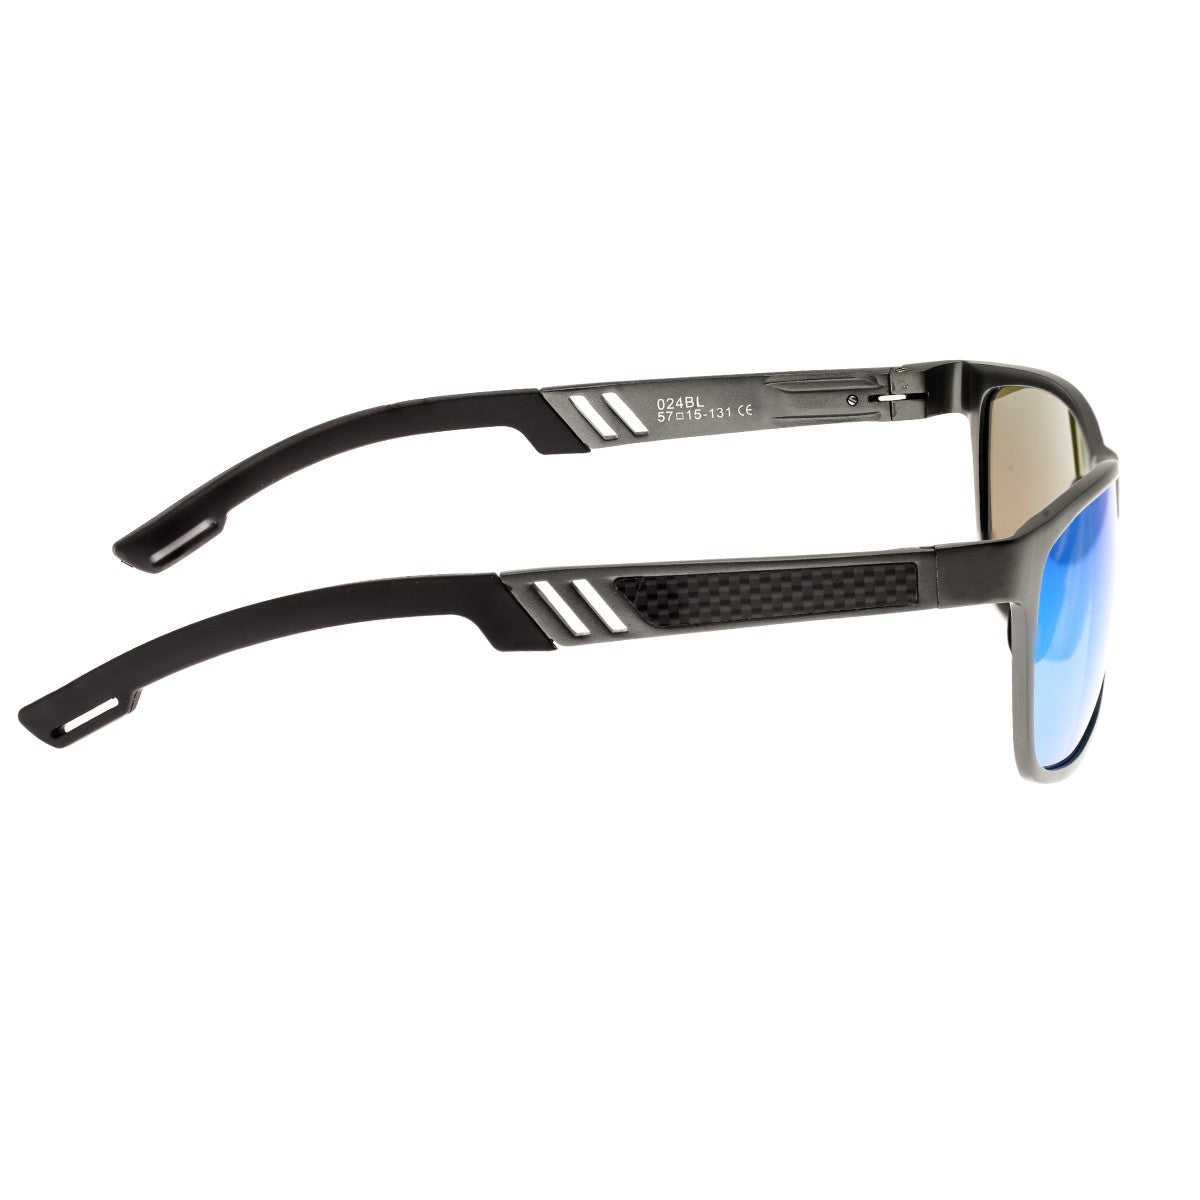 Breed Pyxis Titanium Polarized Sunglasses - Gunmetal/Blue - BSG024BL